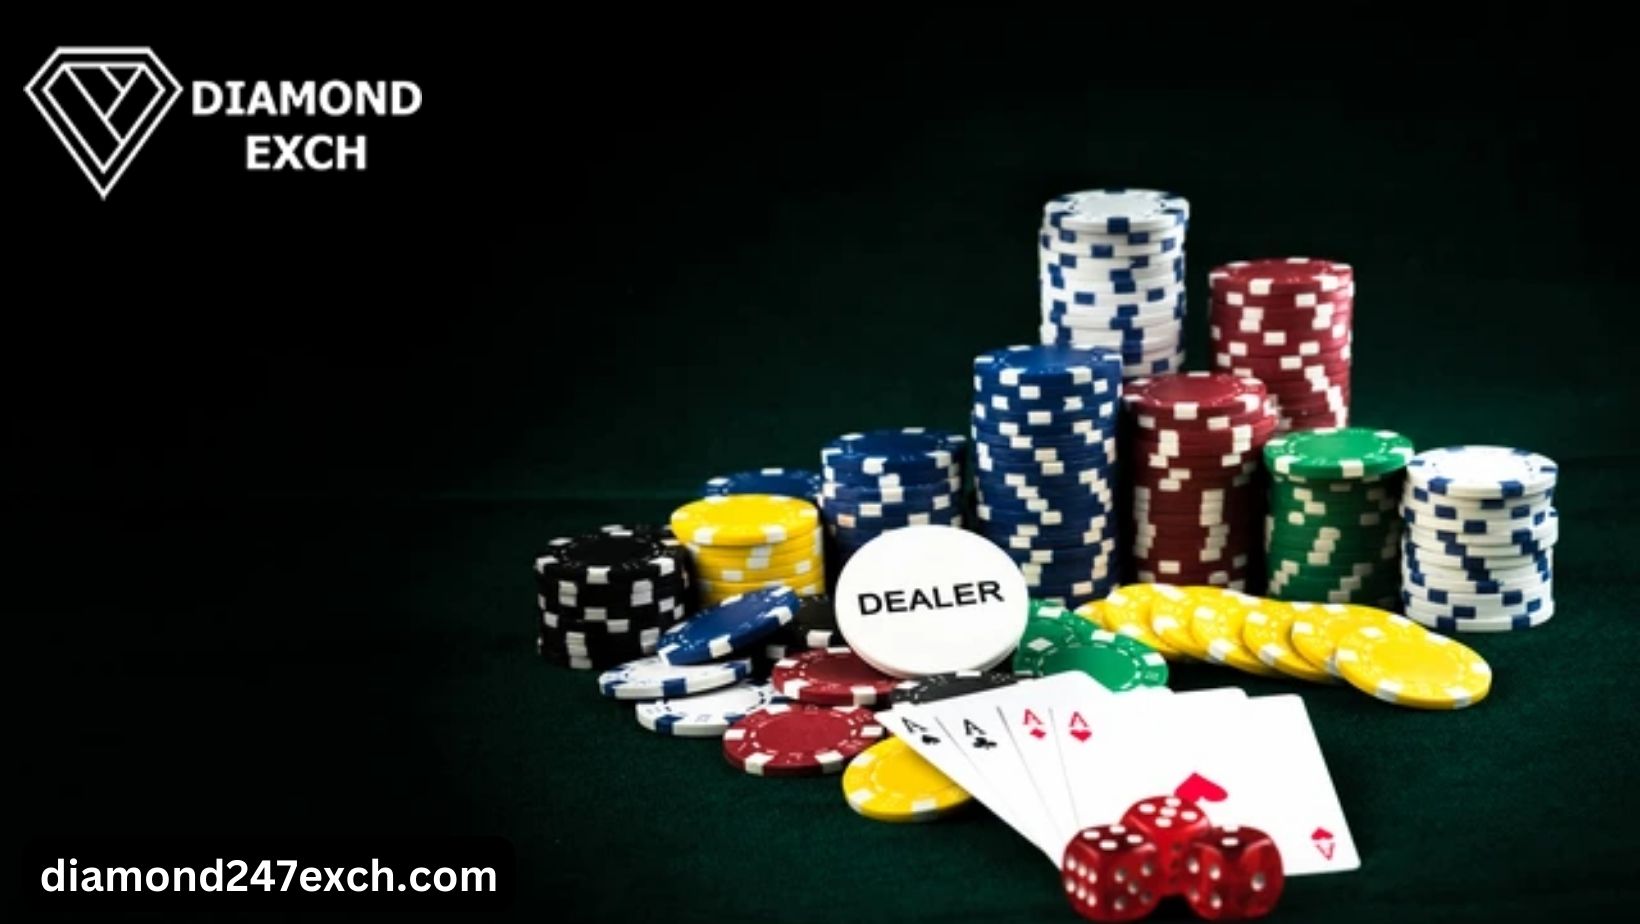 Diamondexch is The Best platform for Online Casino Games